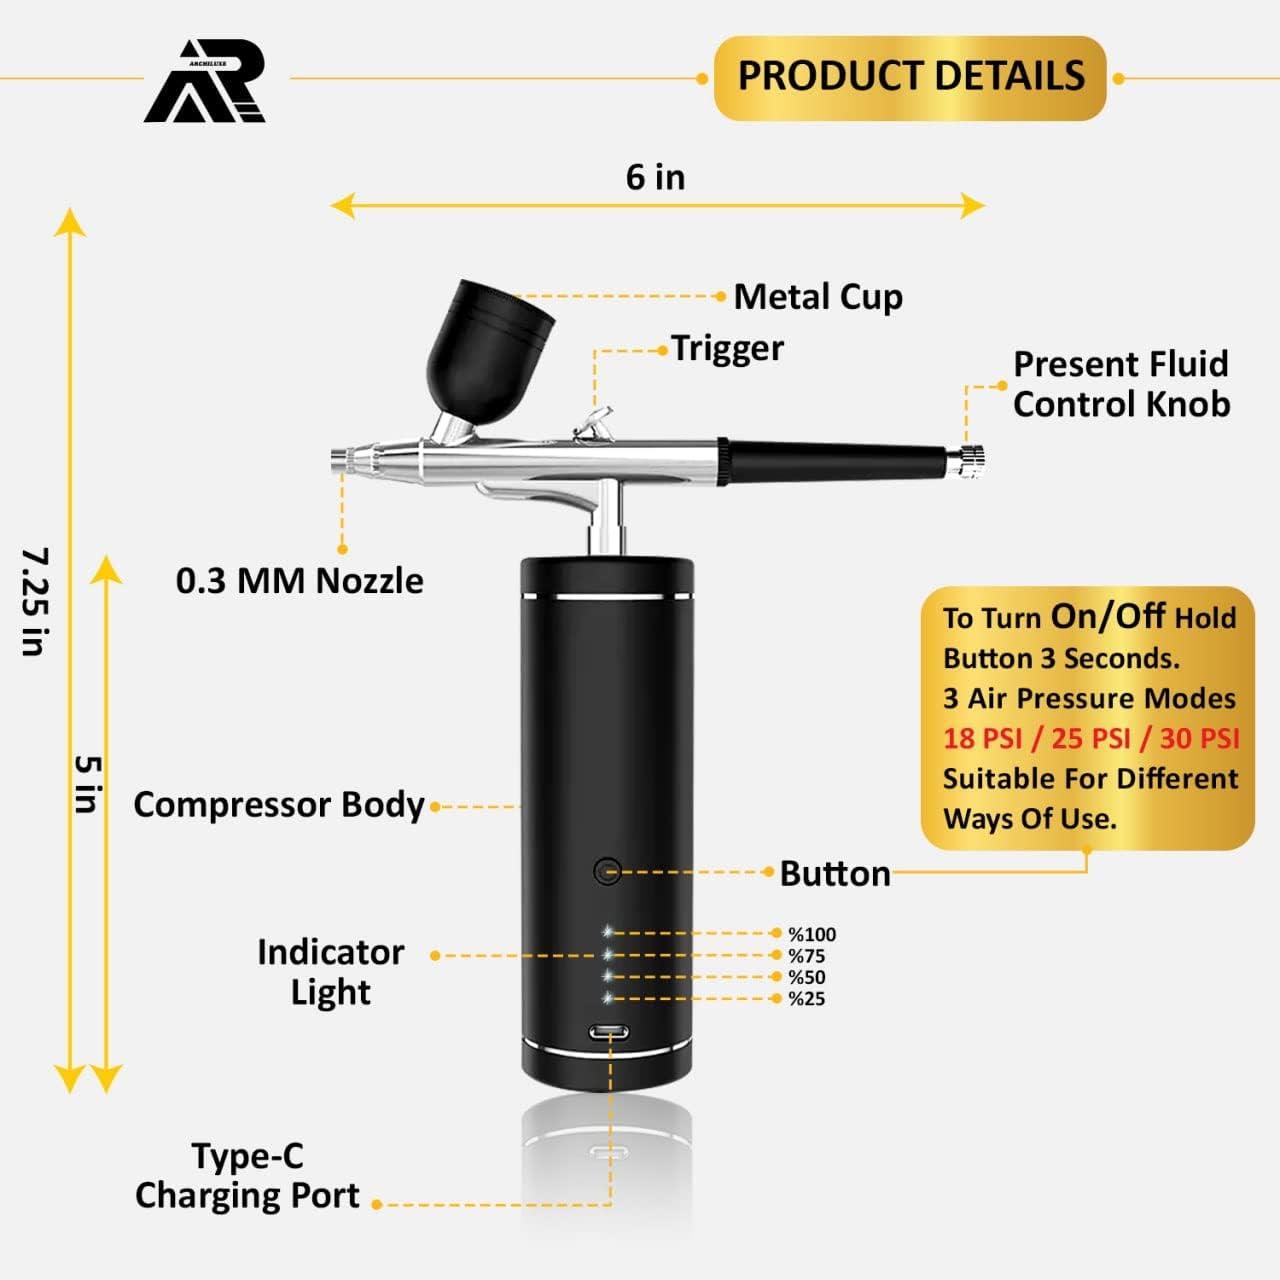 Portable Barber Airbrush Compressor Kit